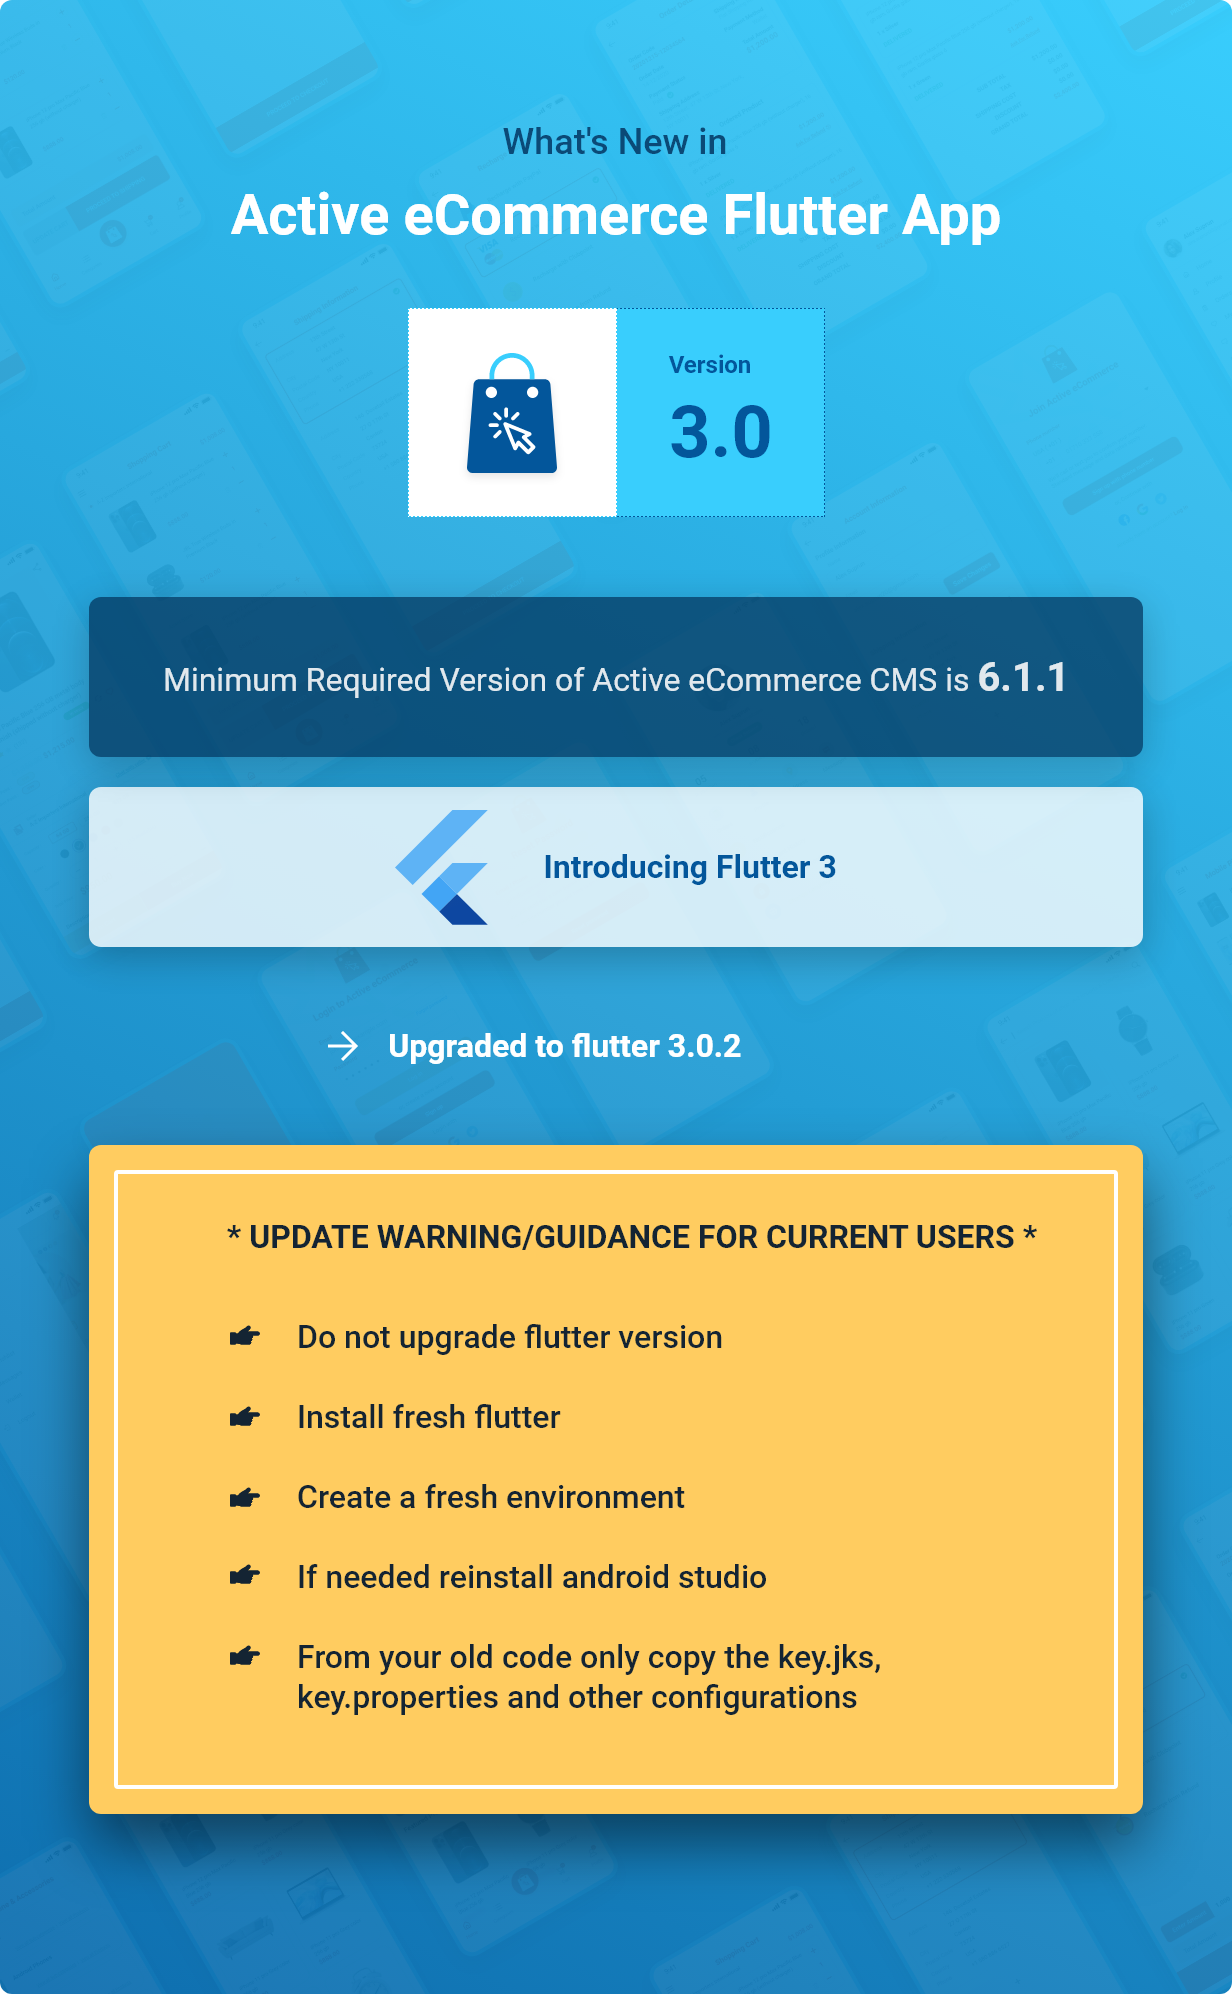 Active eCommerce Flutter App - 2